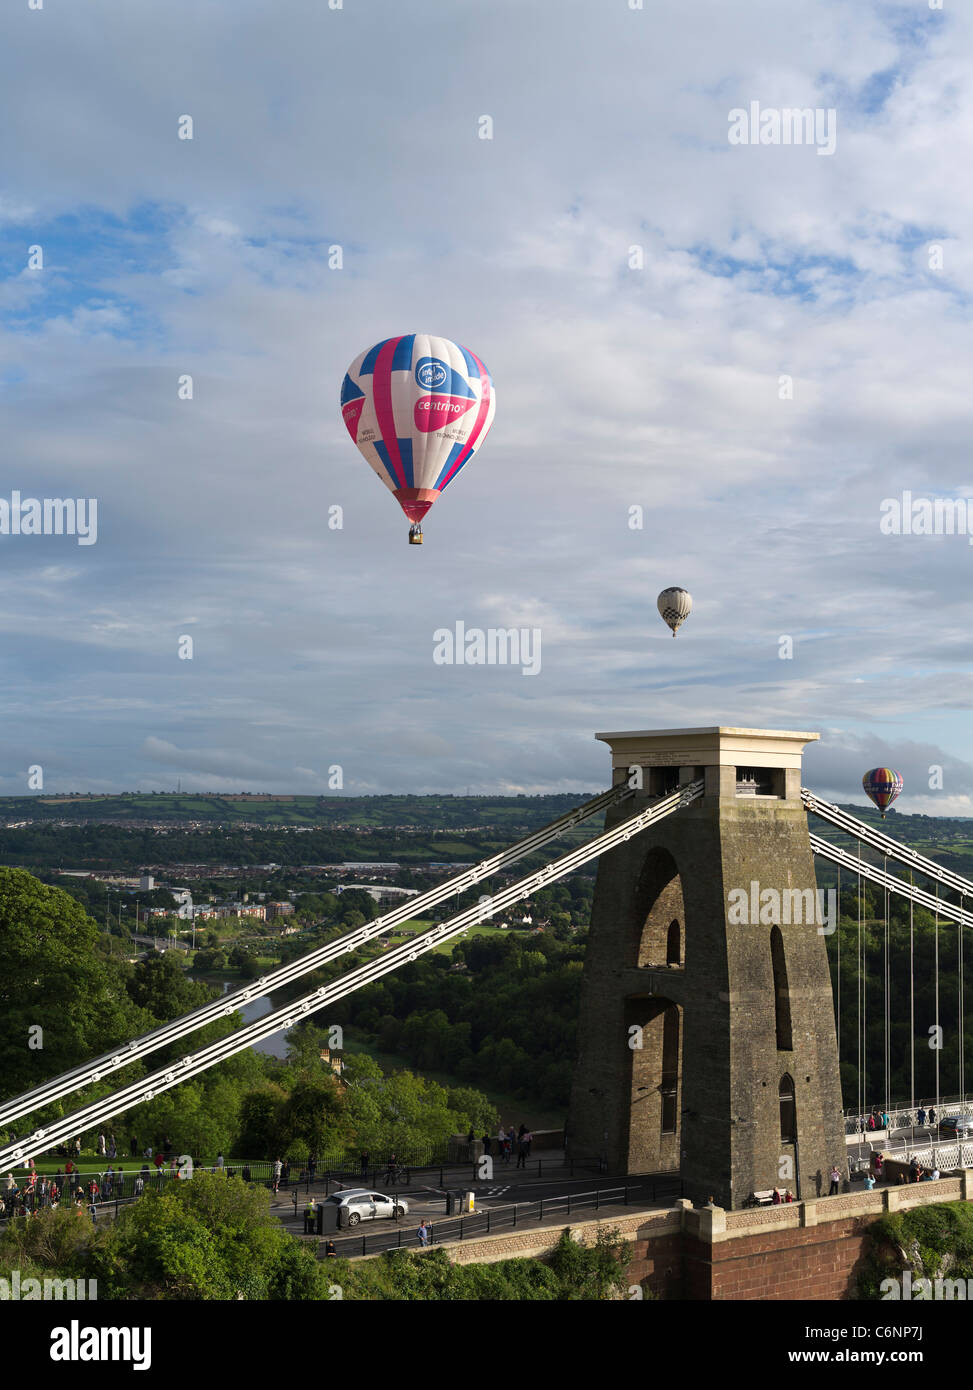 dh Balloon internationales Festival CLIFTON BRISTOL Heißluftballons fliegen Über der Hängebrücke uk Fiesta England UK Stockfoto